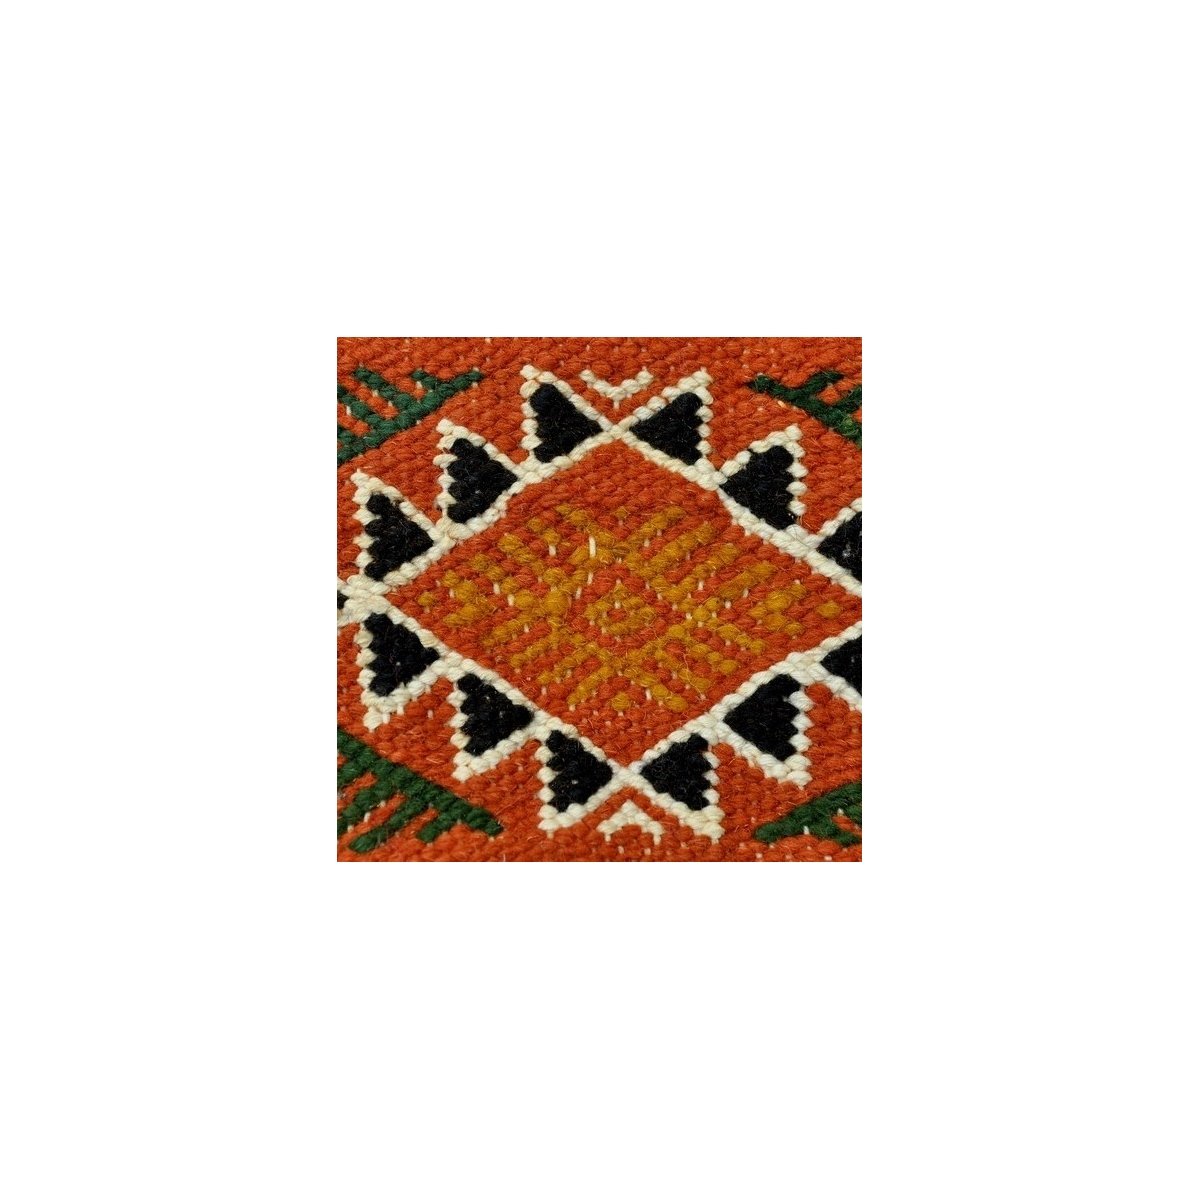 Berber tapijt Tapijt Kilim Beskra 60x100 Veelkleurig (Handgeweven, Wol, Tunesië) Tunesisch kilimdeken, Marokkaanse stijl. Rechth